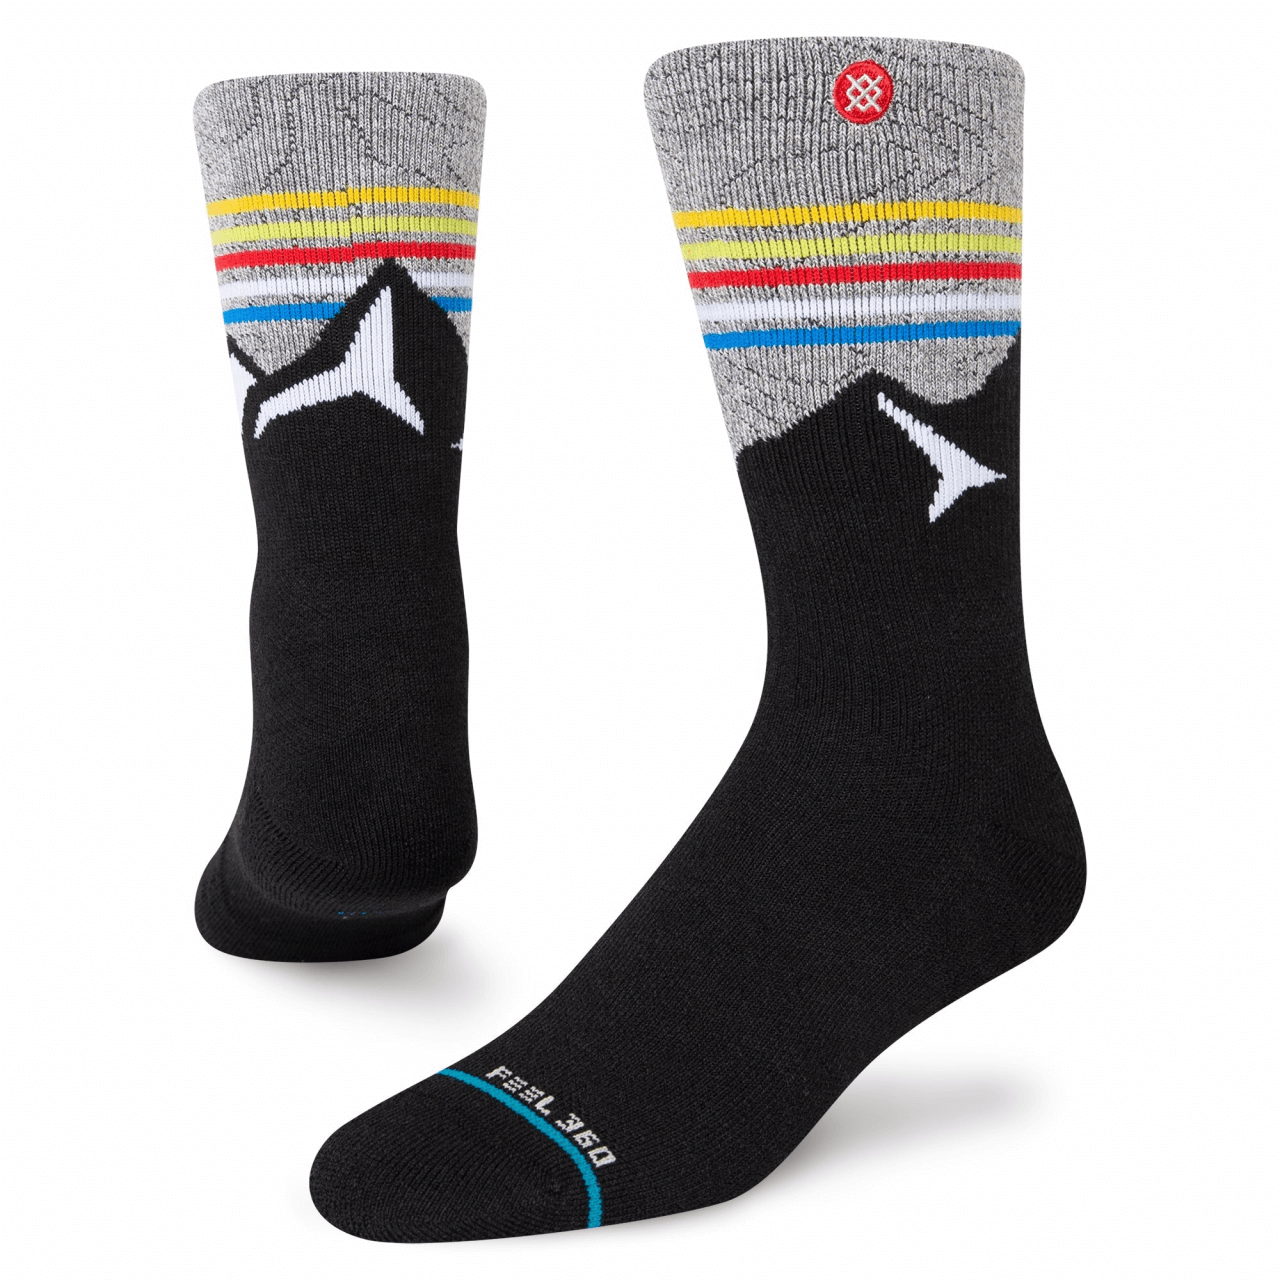 Unisex ponožky Stance Chin Peak